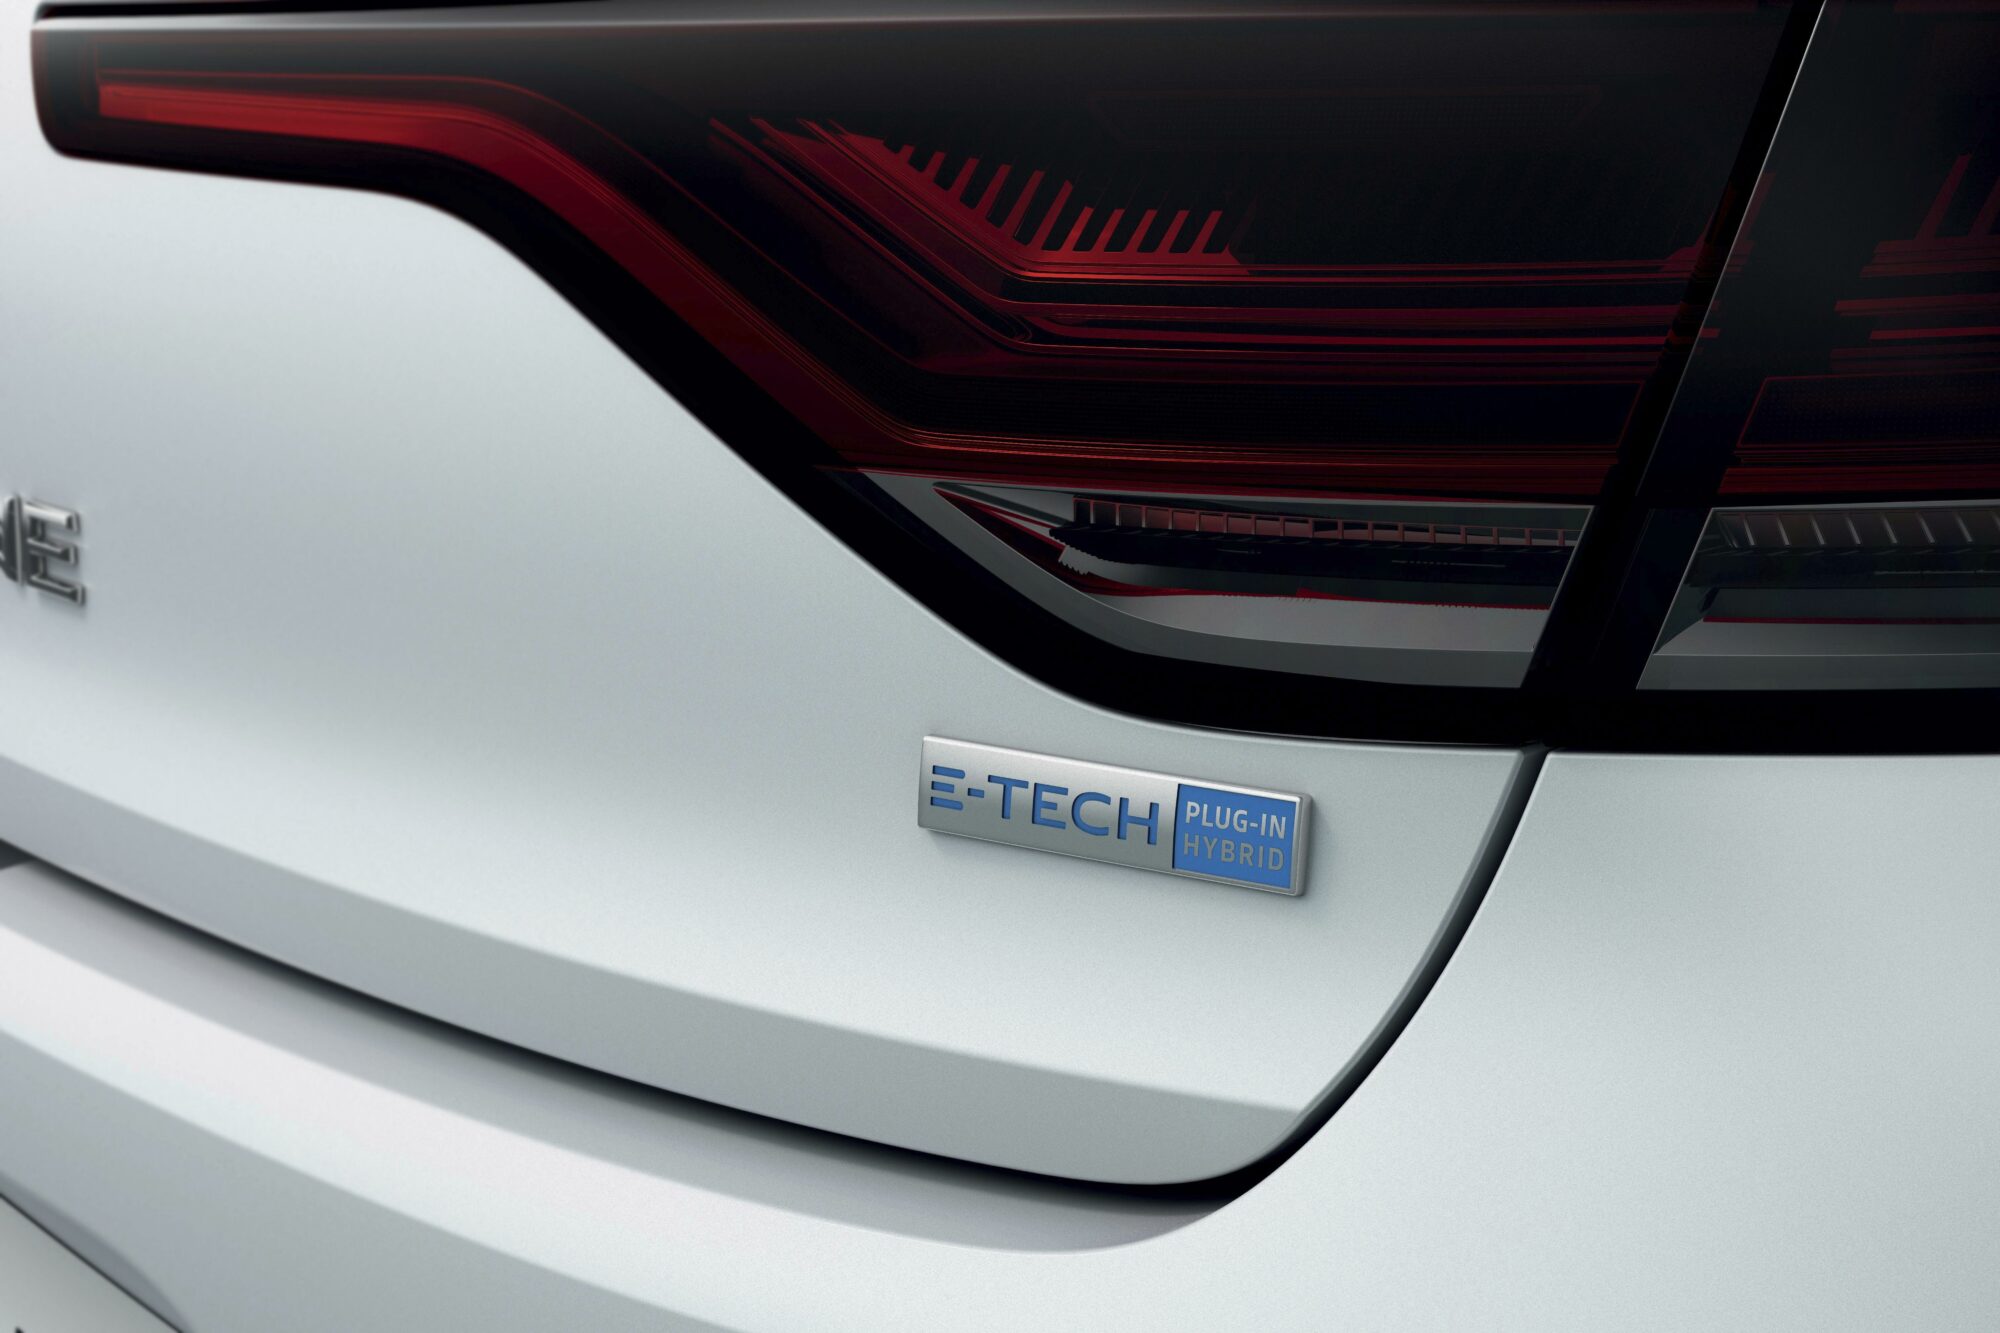 2020 - New Renault MEGANE E-TECH Plug-in